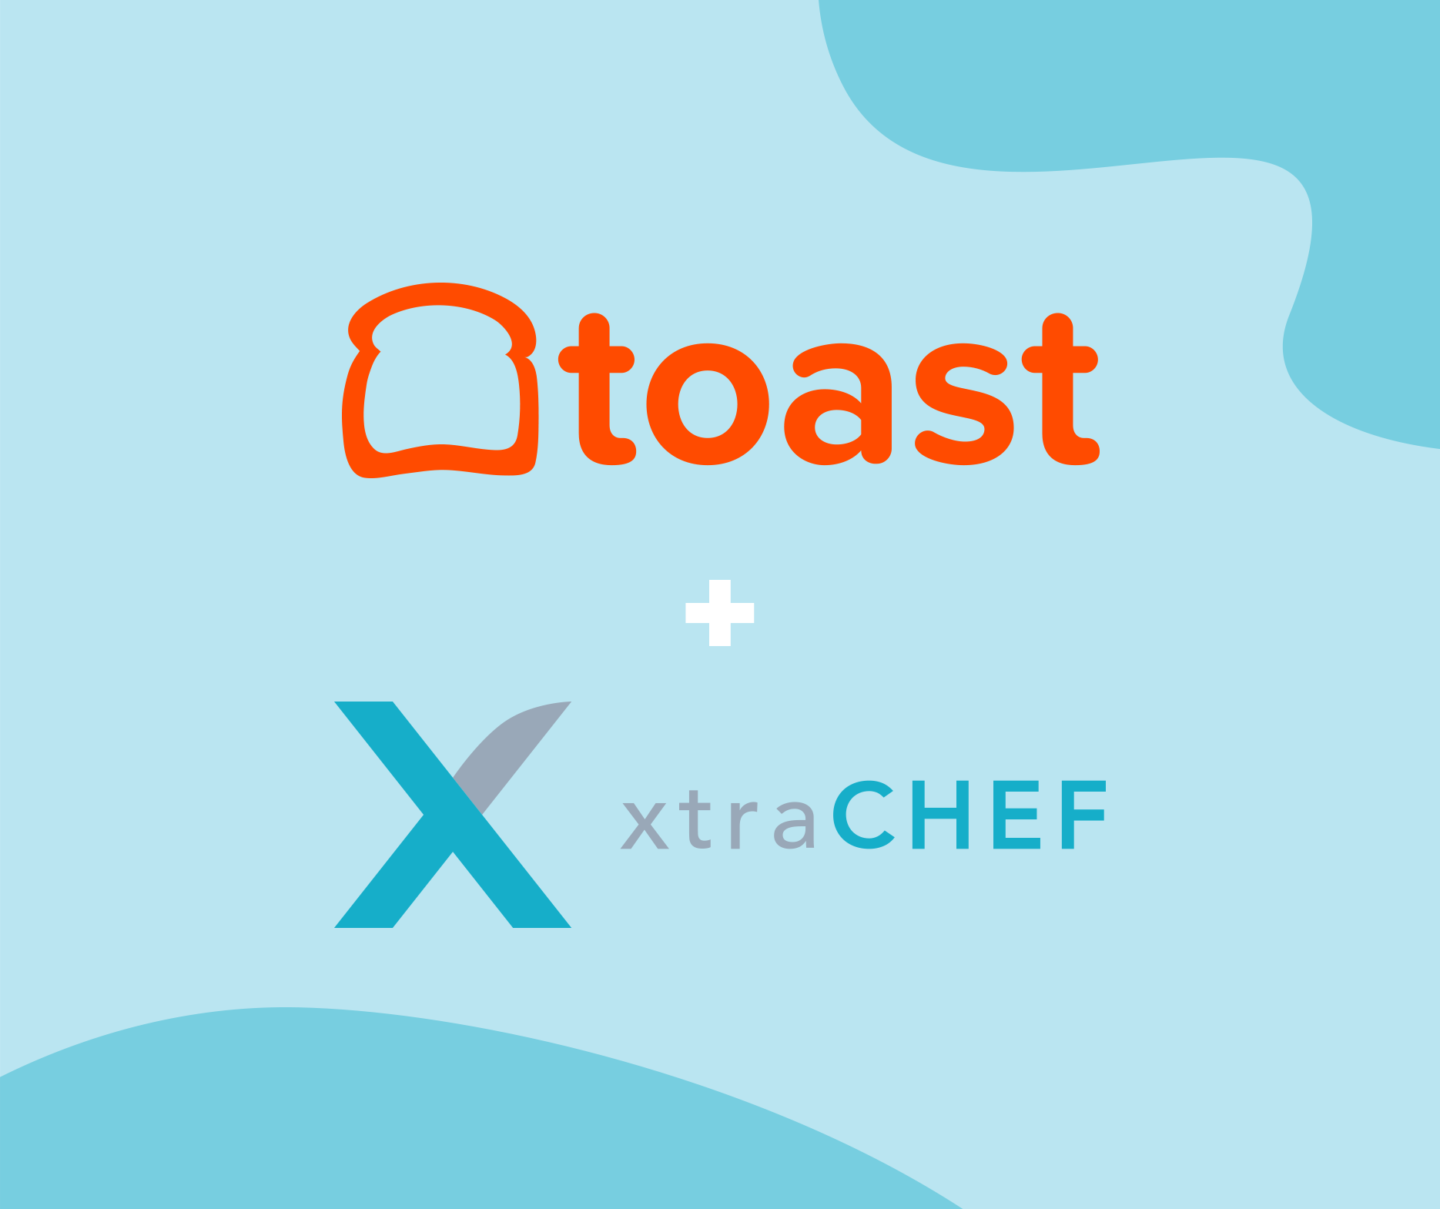 xtrachef toast partnership